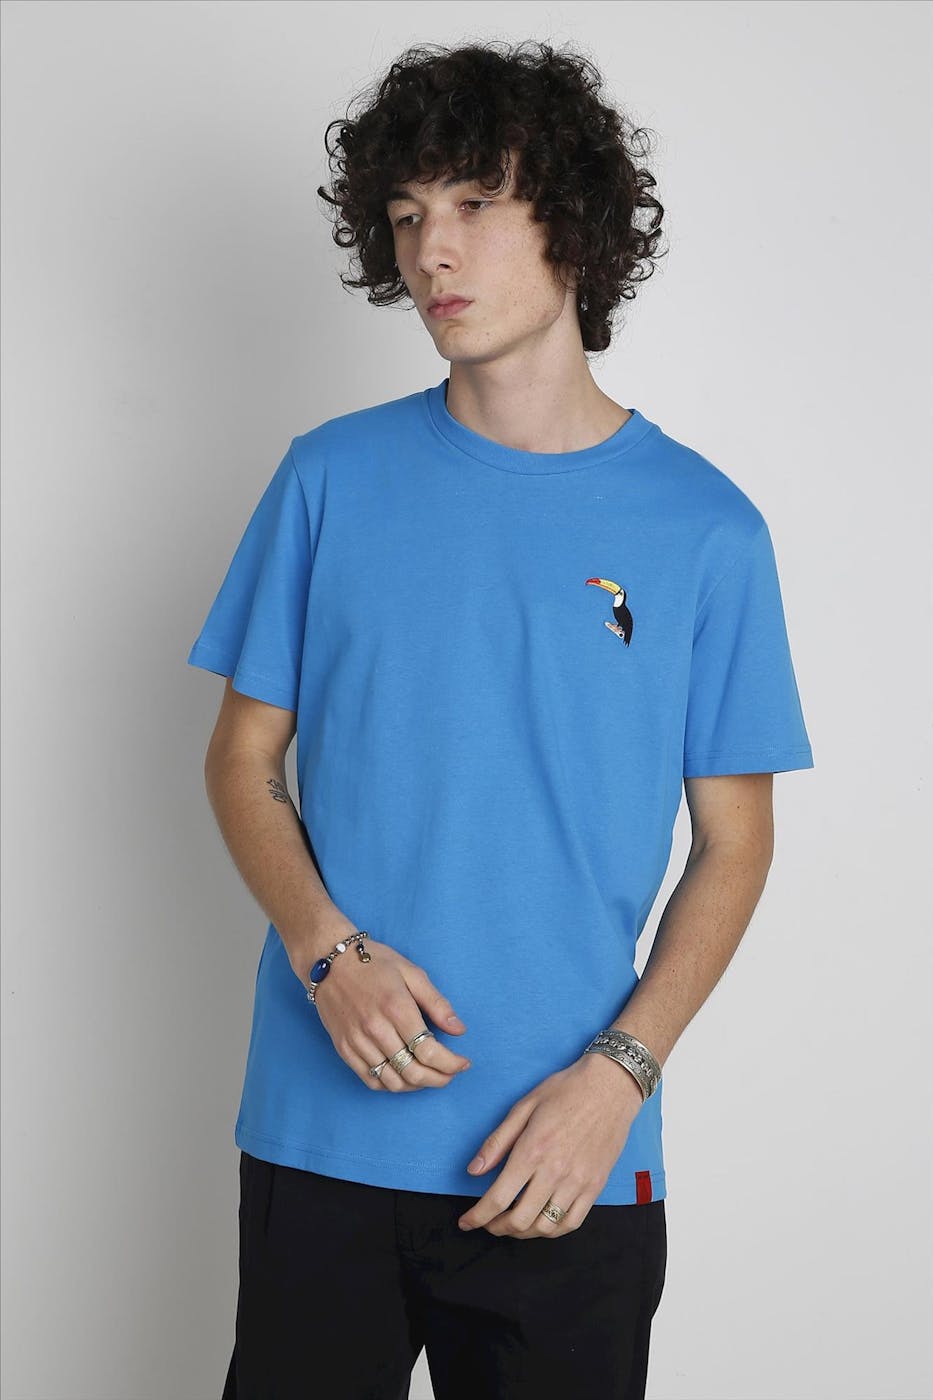 Antwrp - Felblauwe Toekan T-shirt